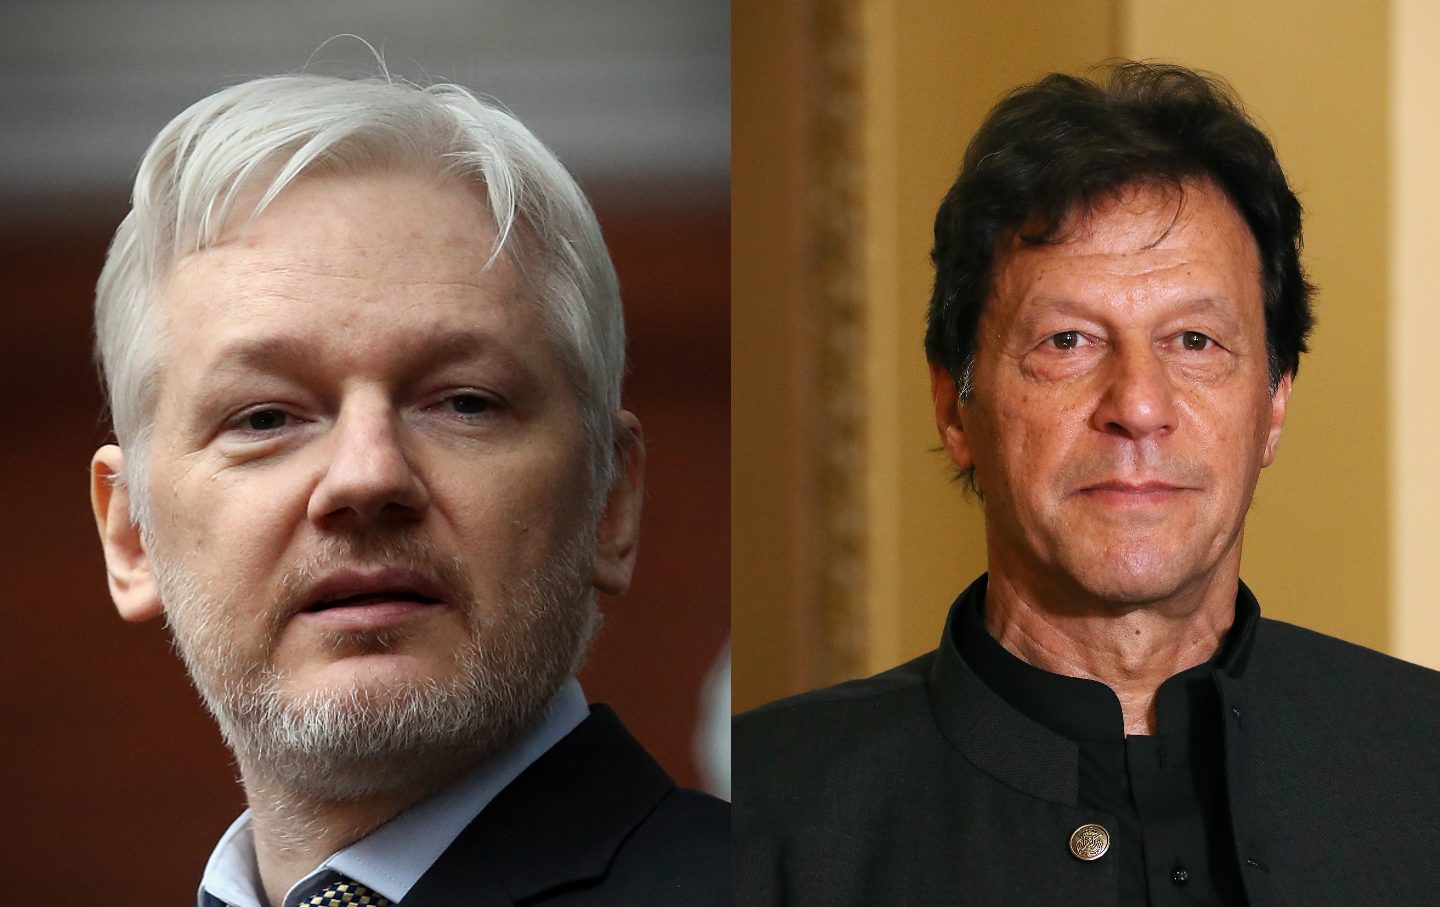 Wikileaks founder Julian Assange (L) and former Pakistan prime minister Imran Khan (R)